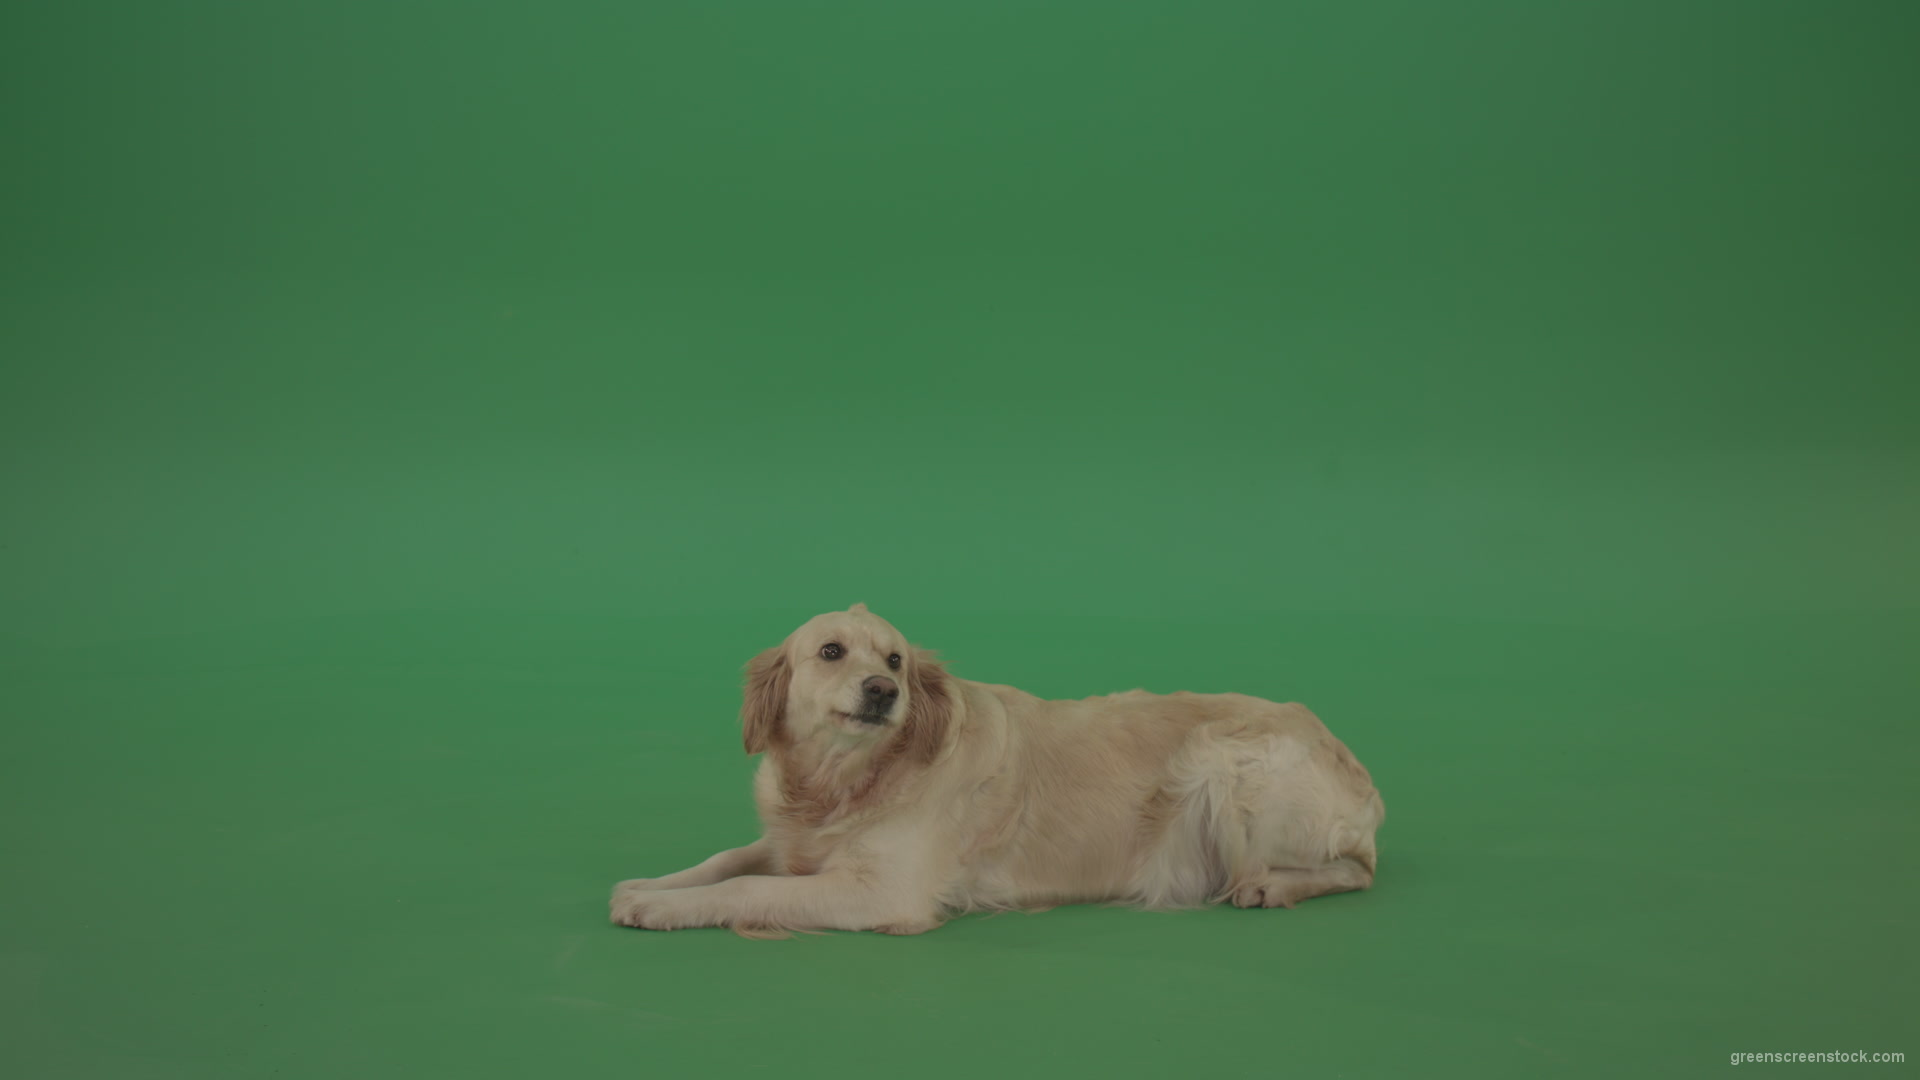 Golden-Retriever-Gun-Dog-Bird-Dog-lying-green-floor-isolated-on-green-screen_006 Green Screen Stock